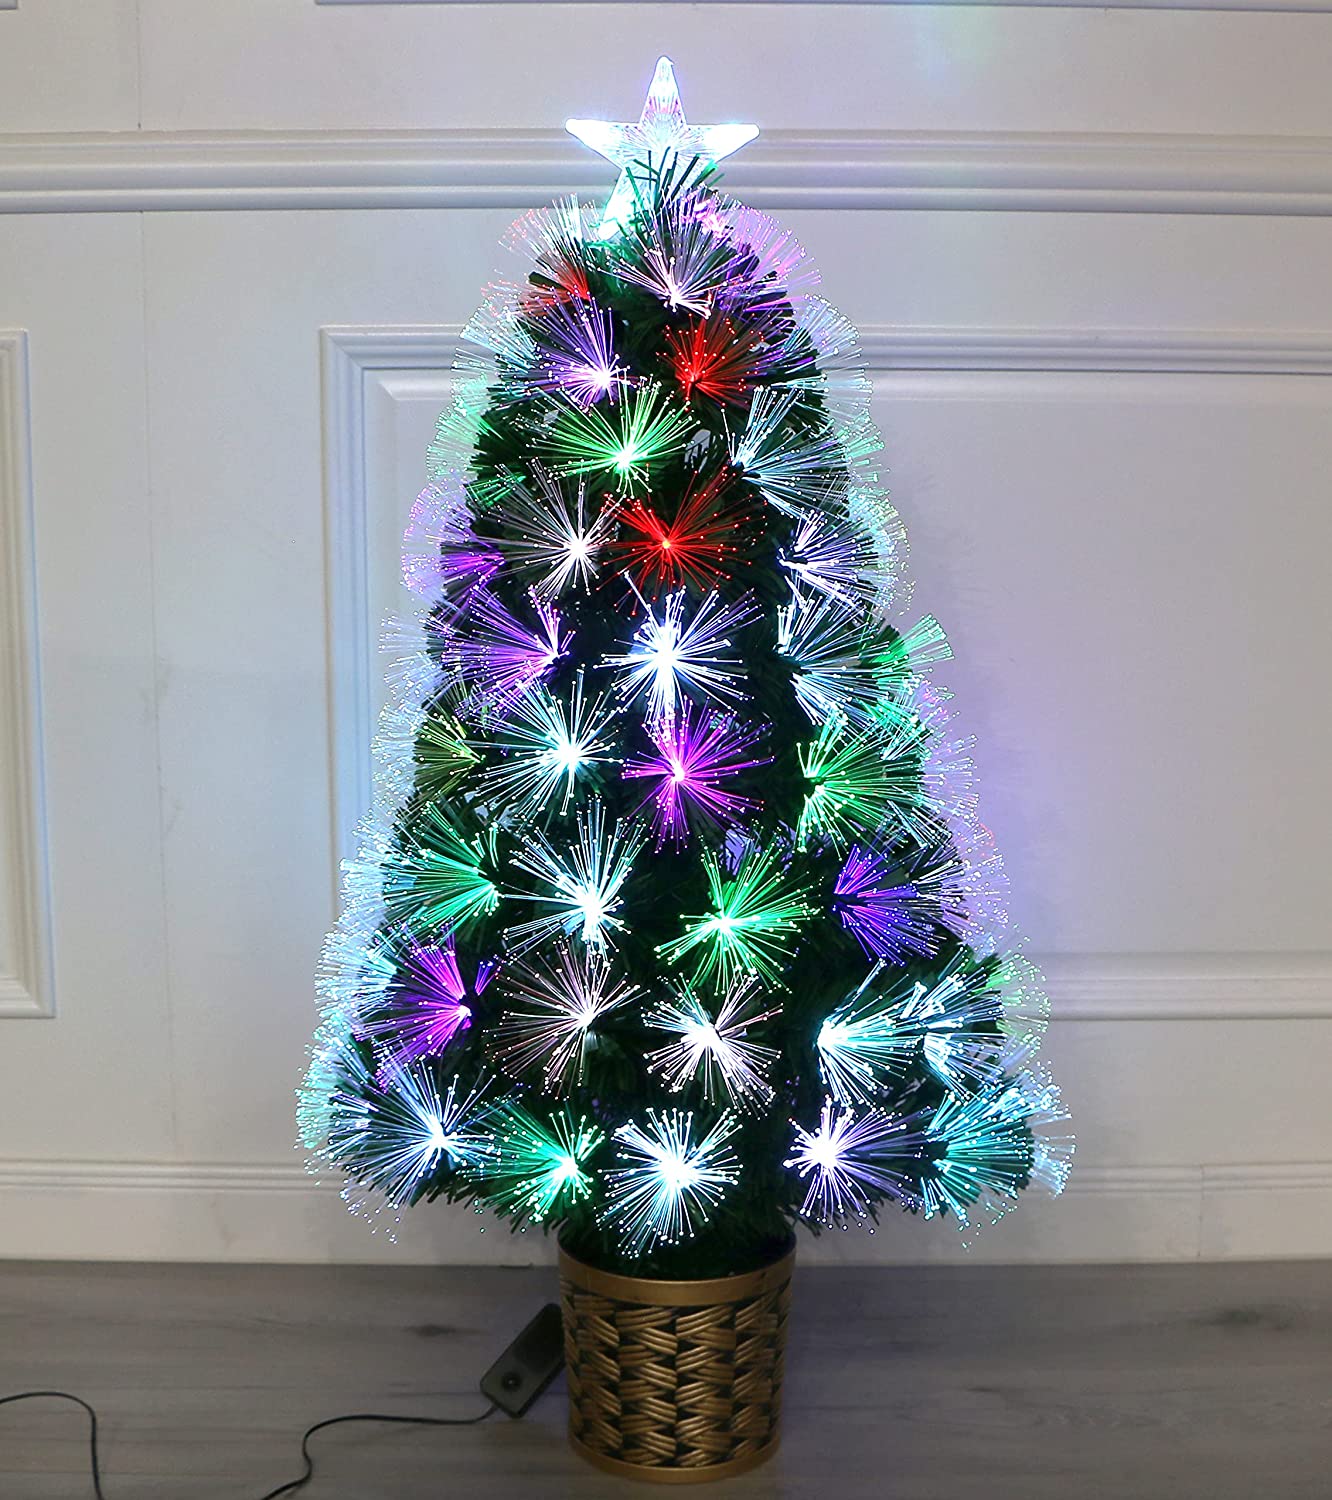 Elowen 3ft 7 Colour LED Fibre Optic Pre-Lit Christmas Tree - Multi-coloured